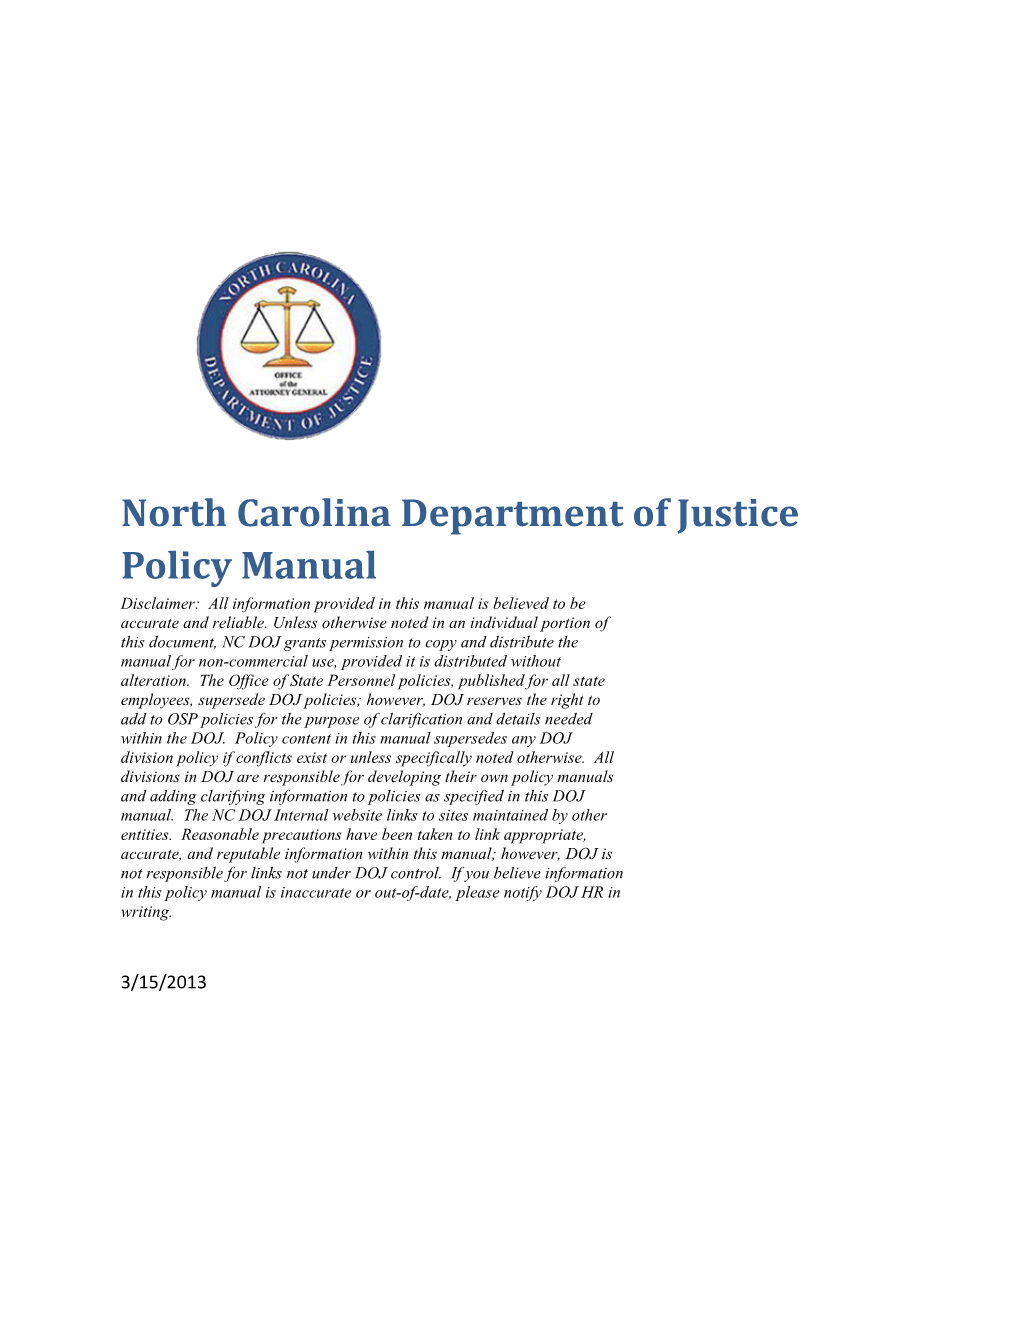 North Carolina Department of Justice Policy Manual